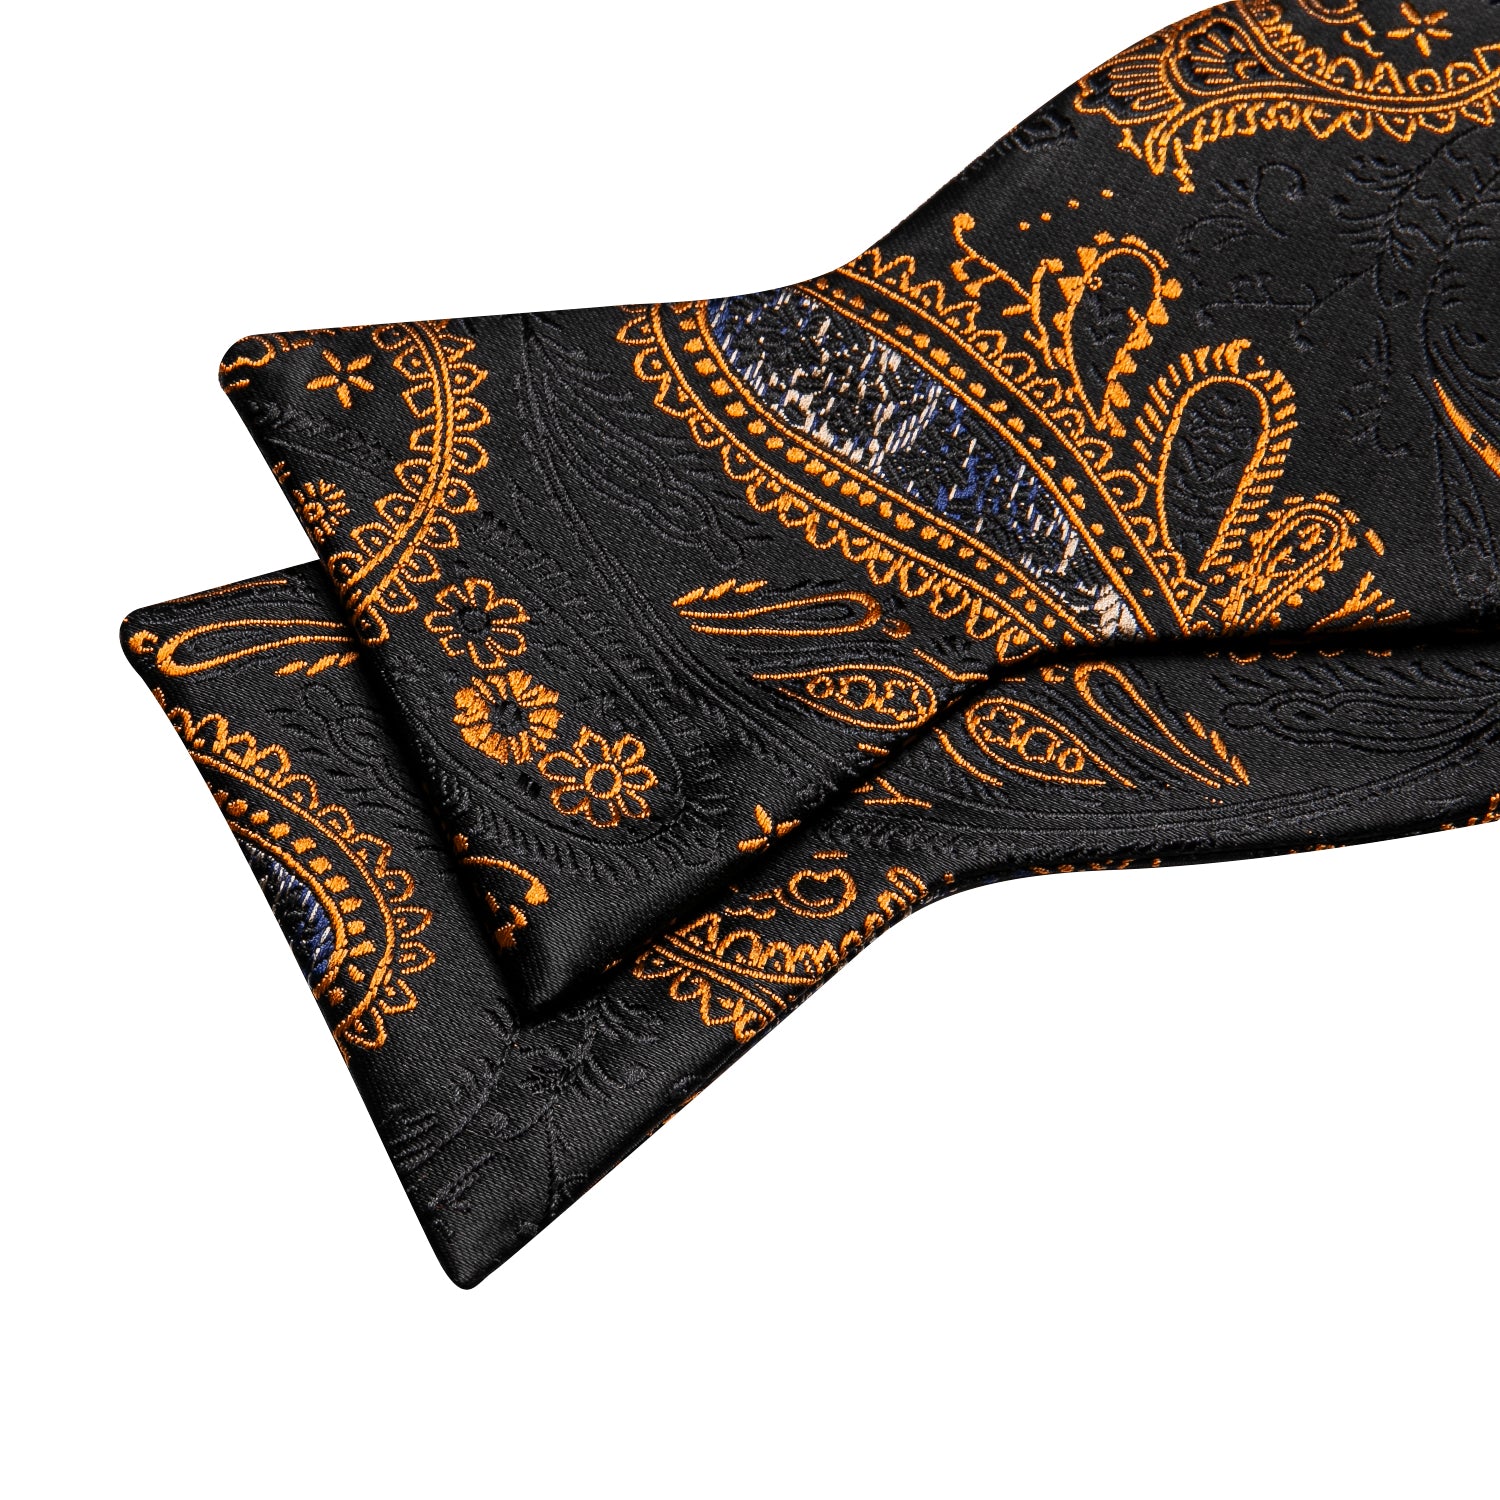 Fashion Black Gold Paisley Bow Tie Hanky Cufflinks Set